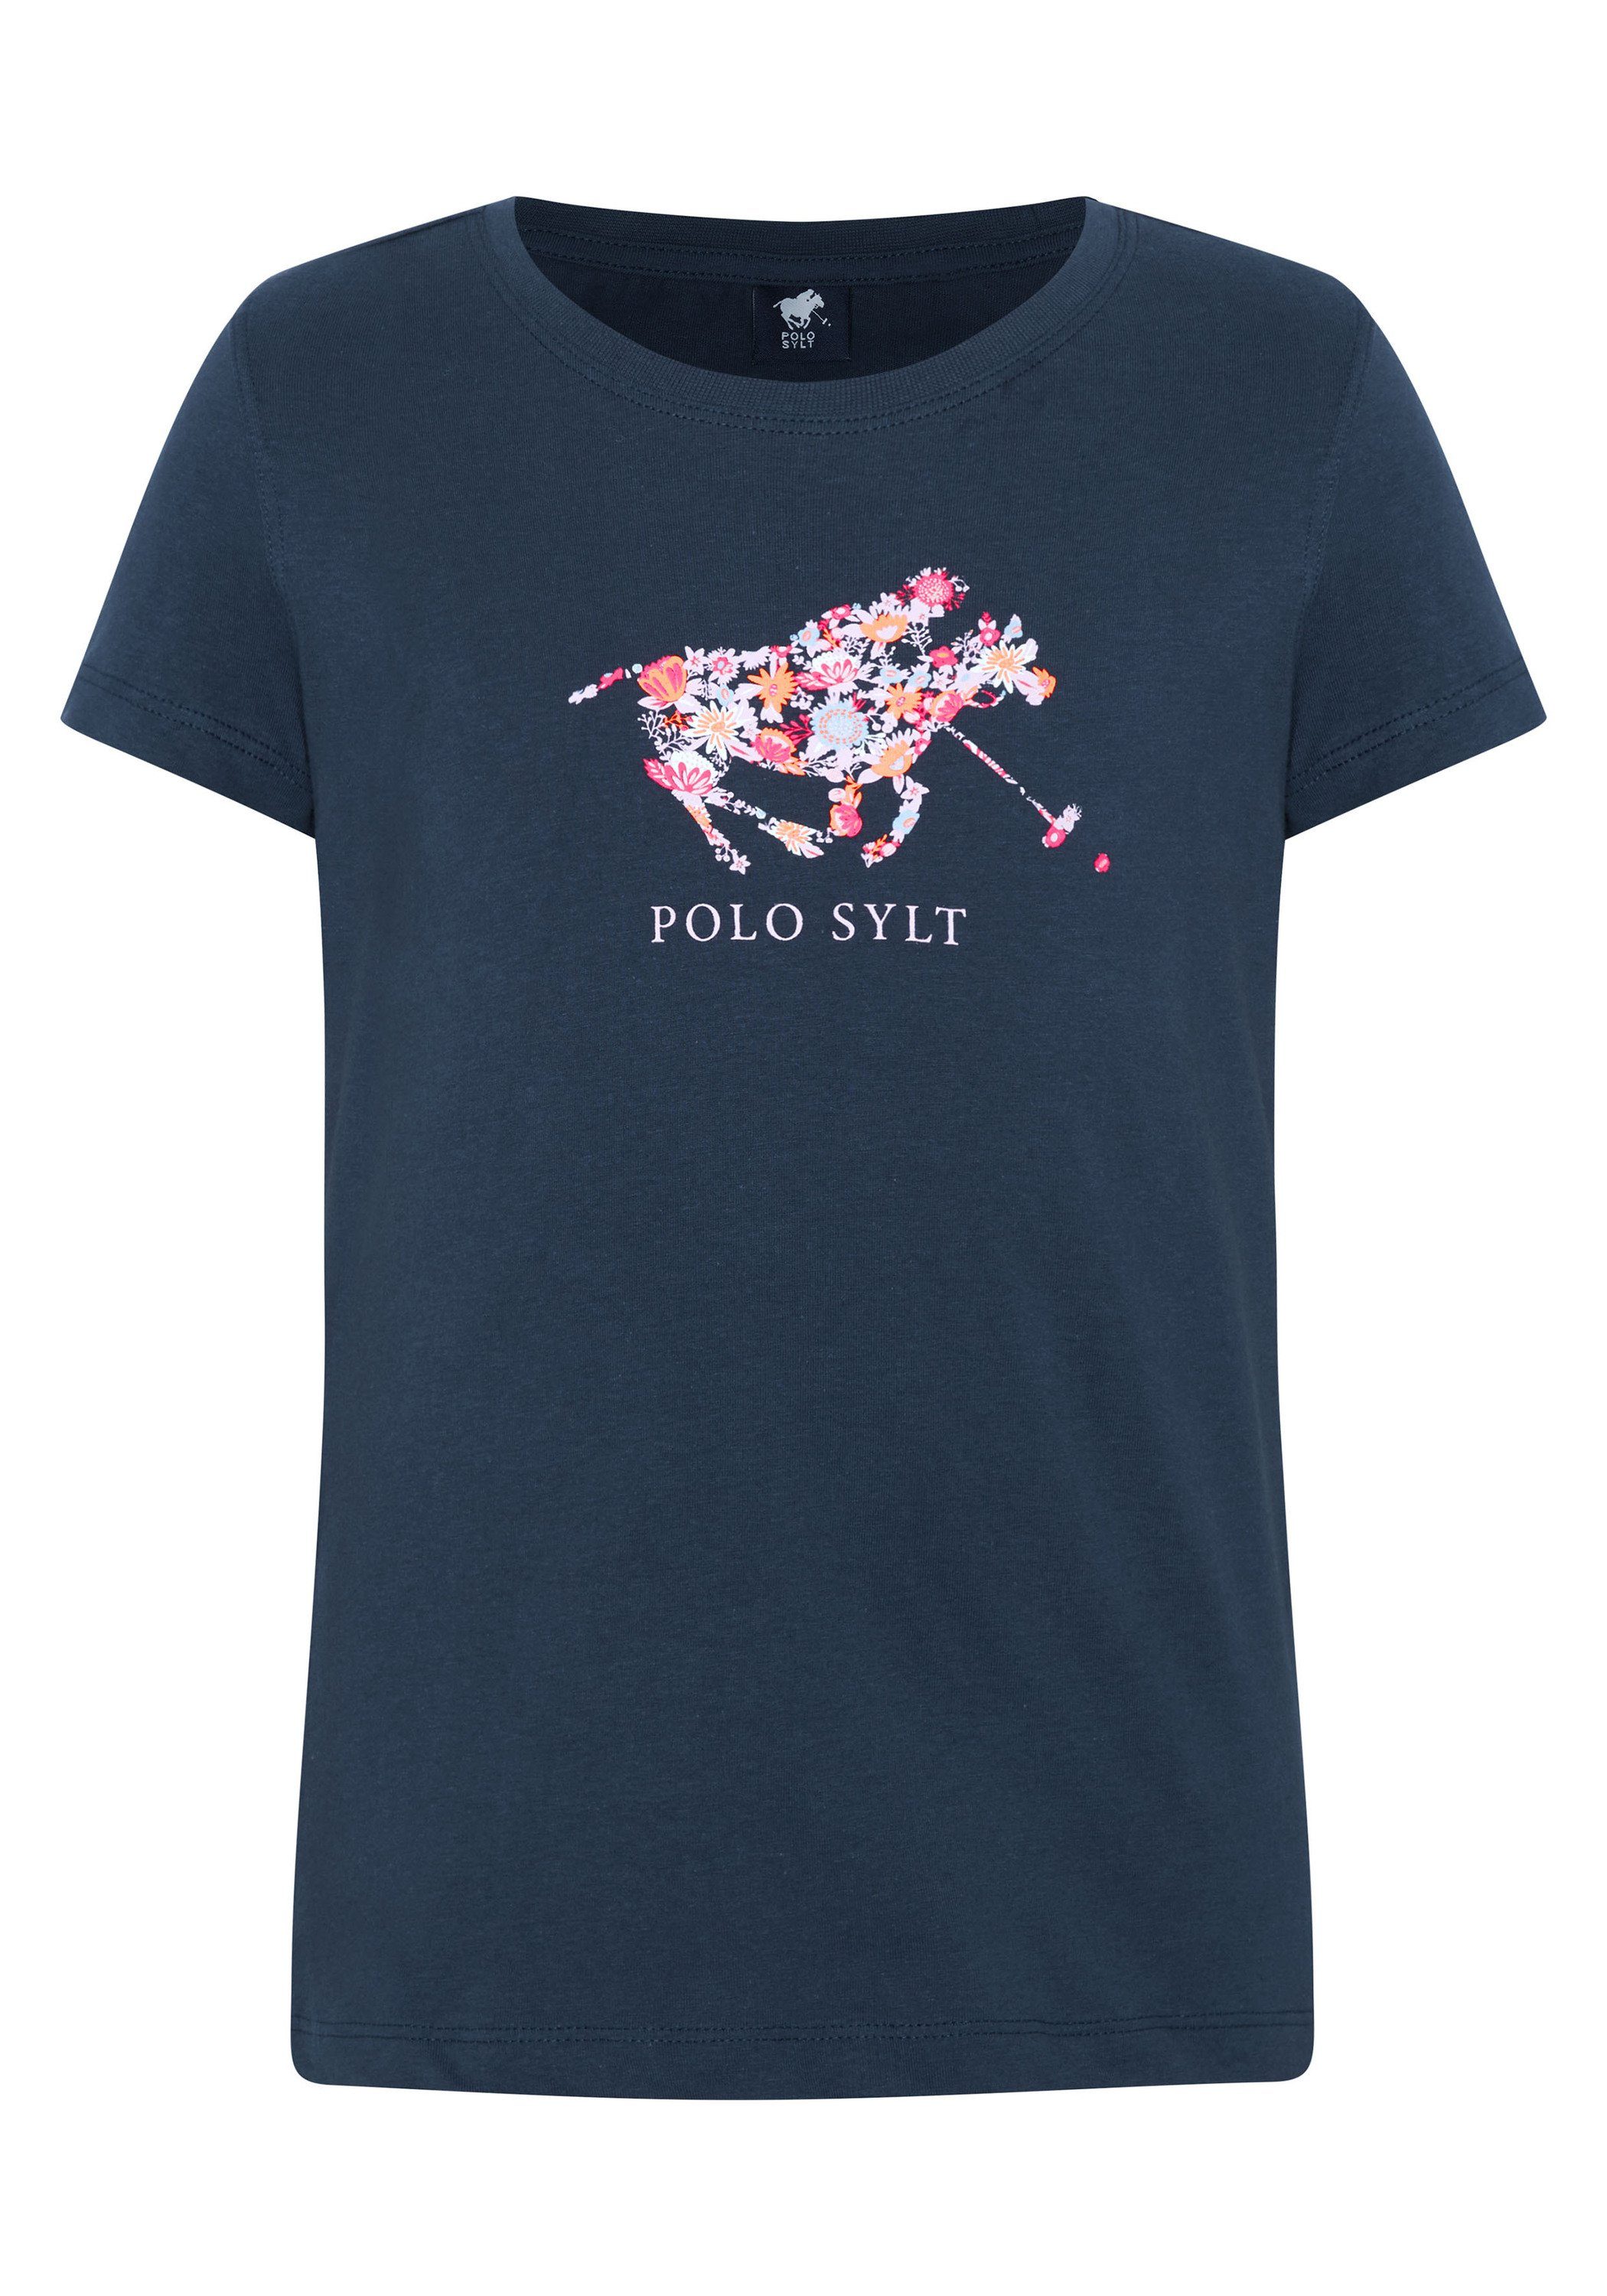 Jersey Polo Sylt aus weichem Total 19-4010 Print-Shirt Eclipse